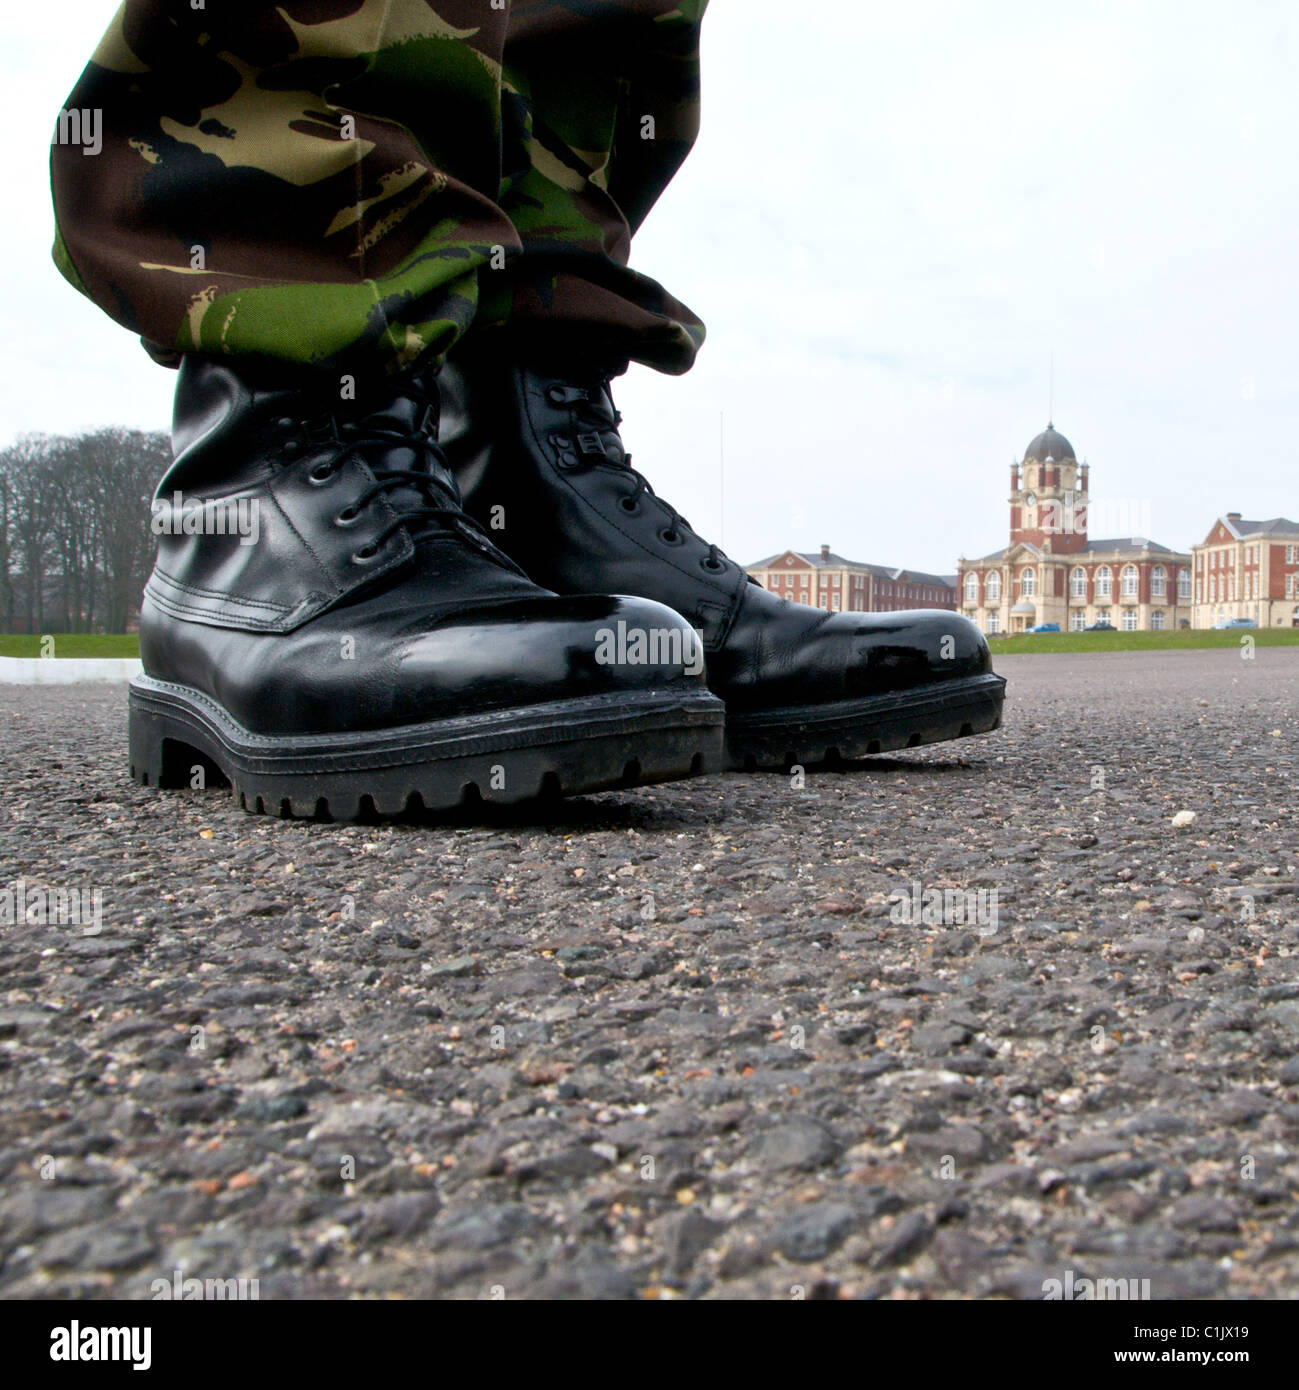 Bota militar brillante fotografías e imágenes de alta resolución - Alamy